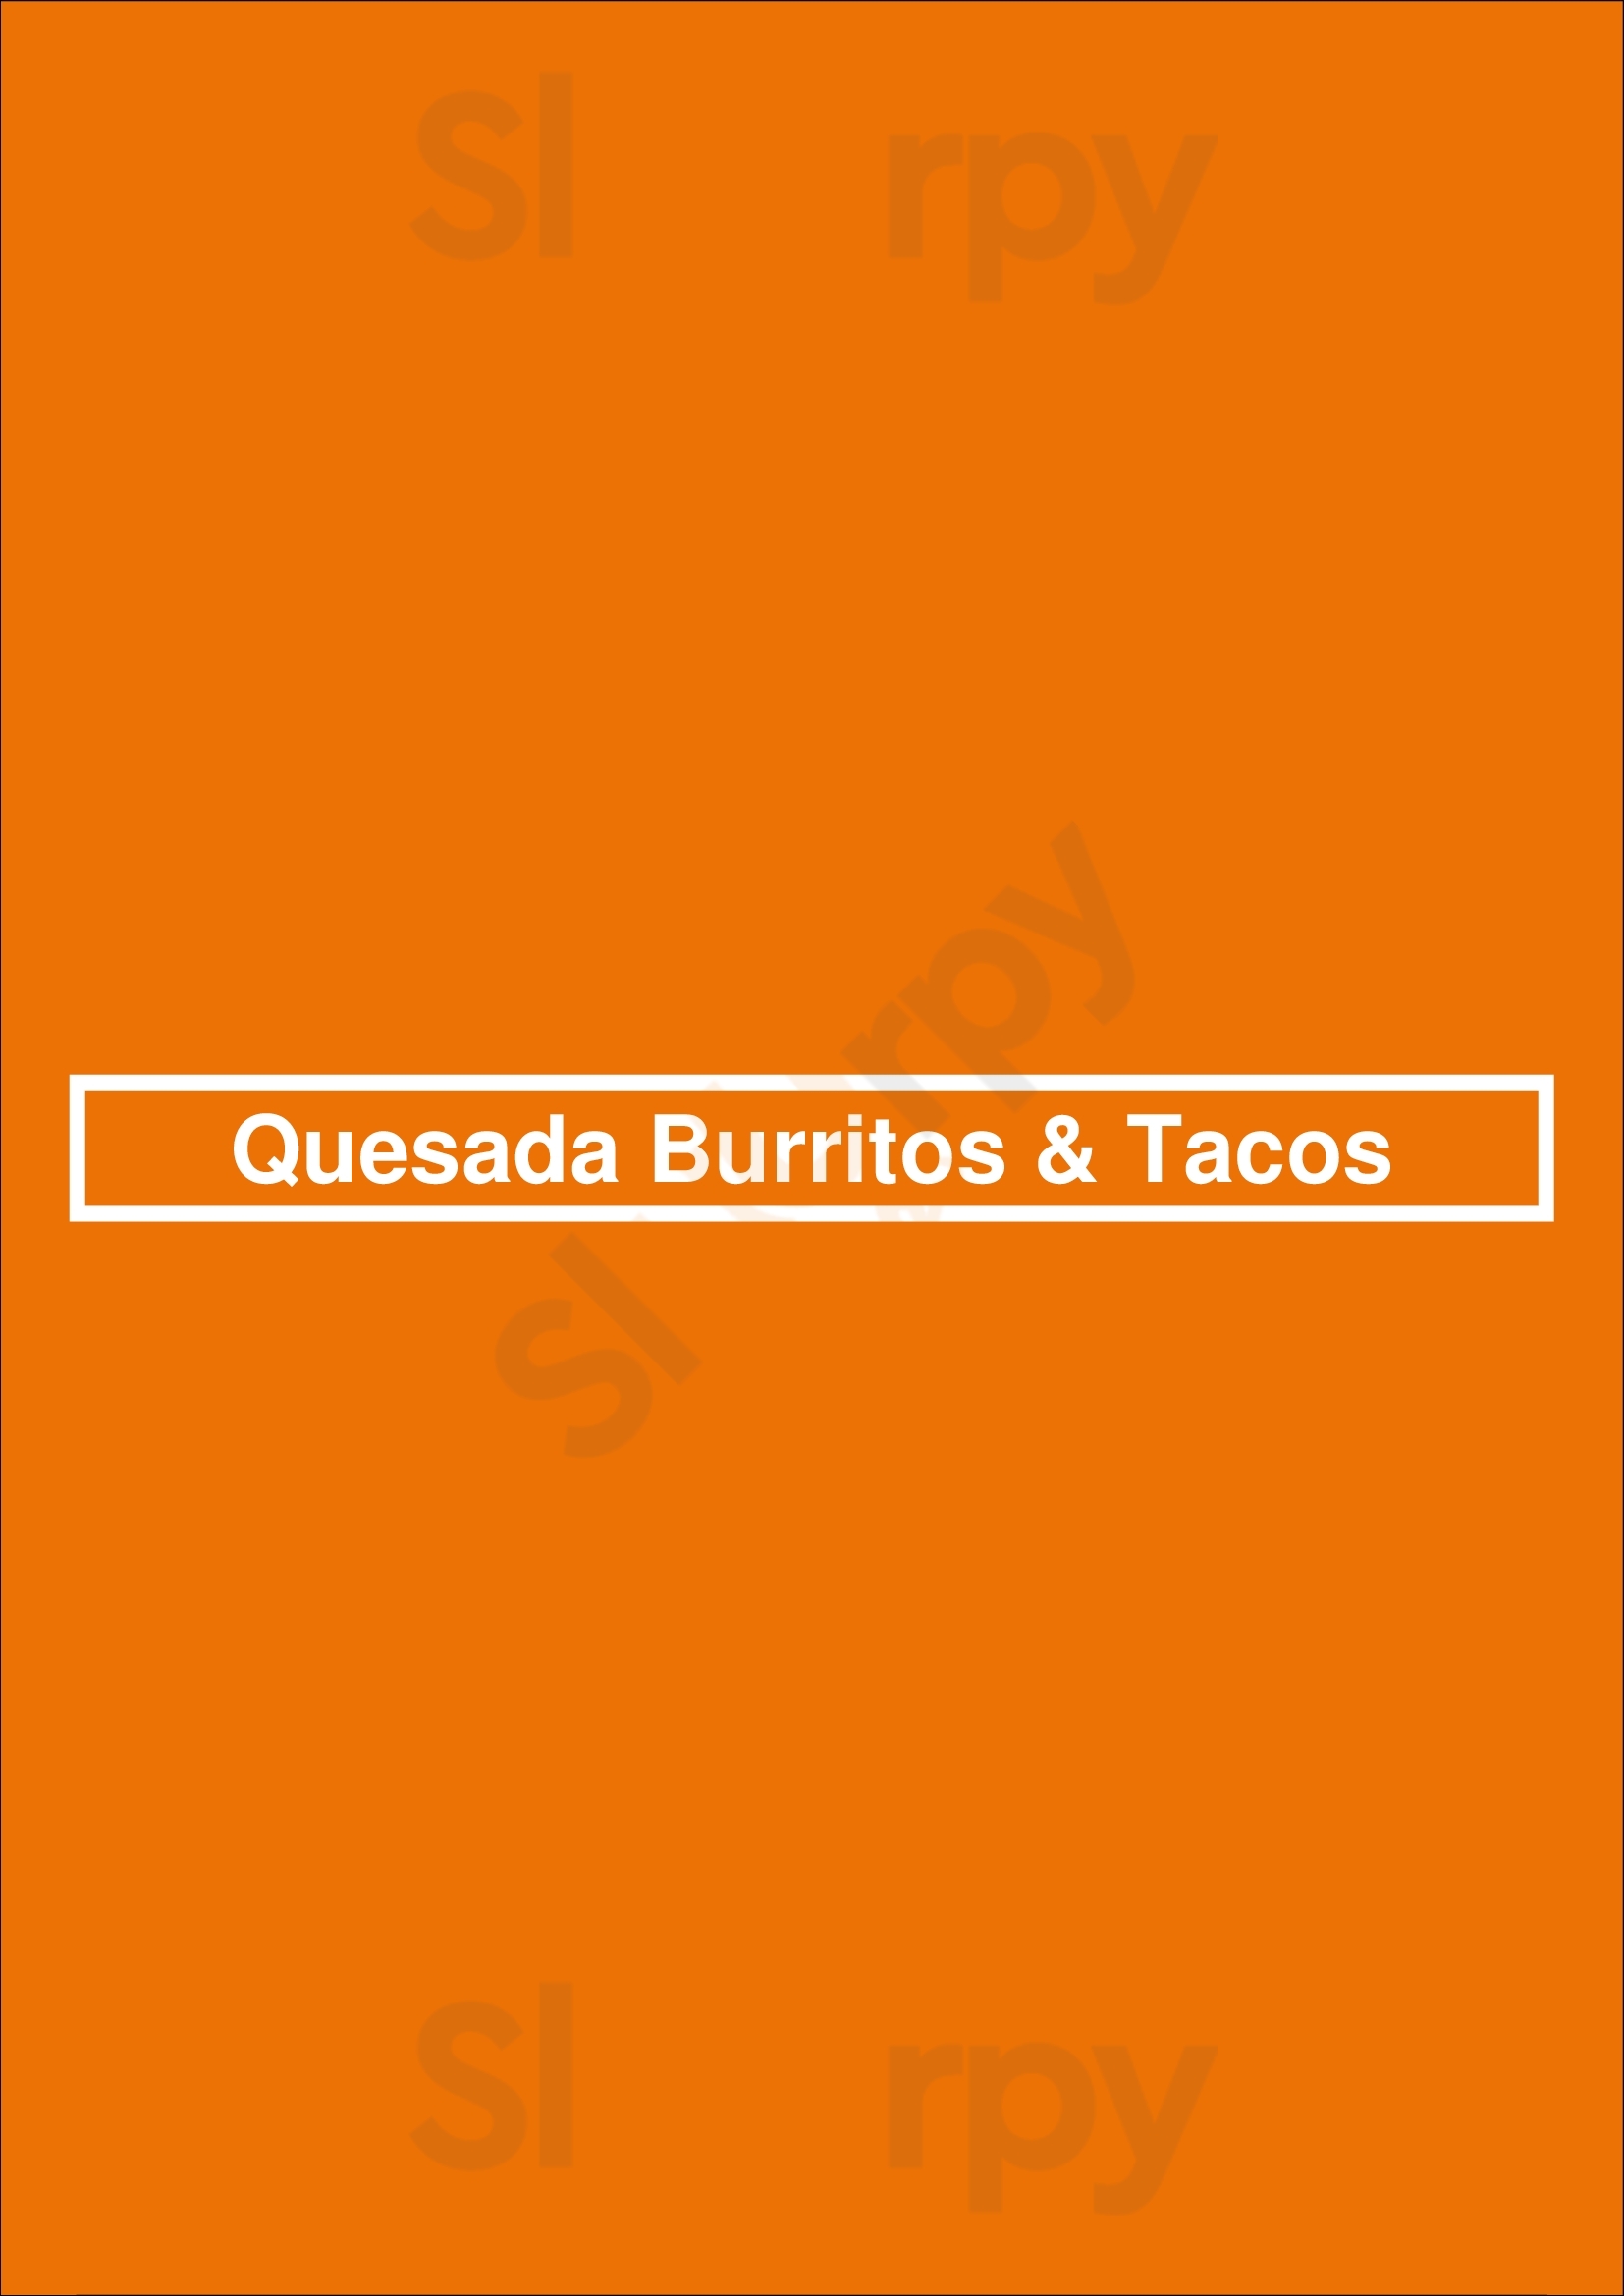 Quesada Burritos & Tacos Windsor Menu - 1